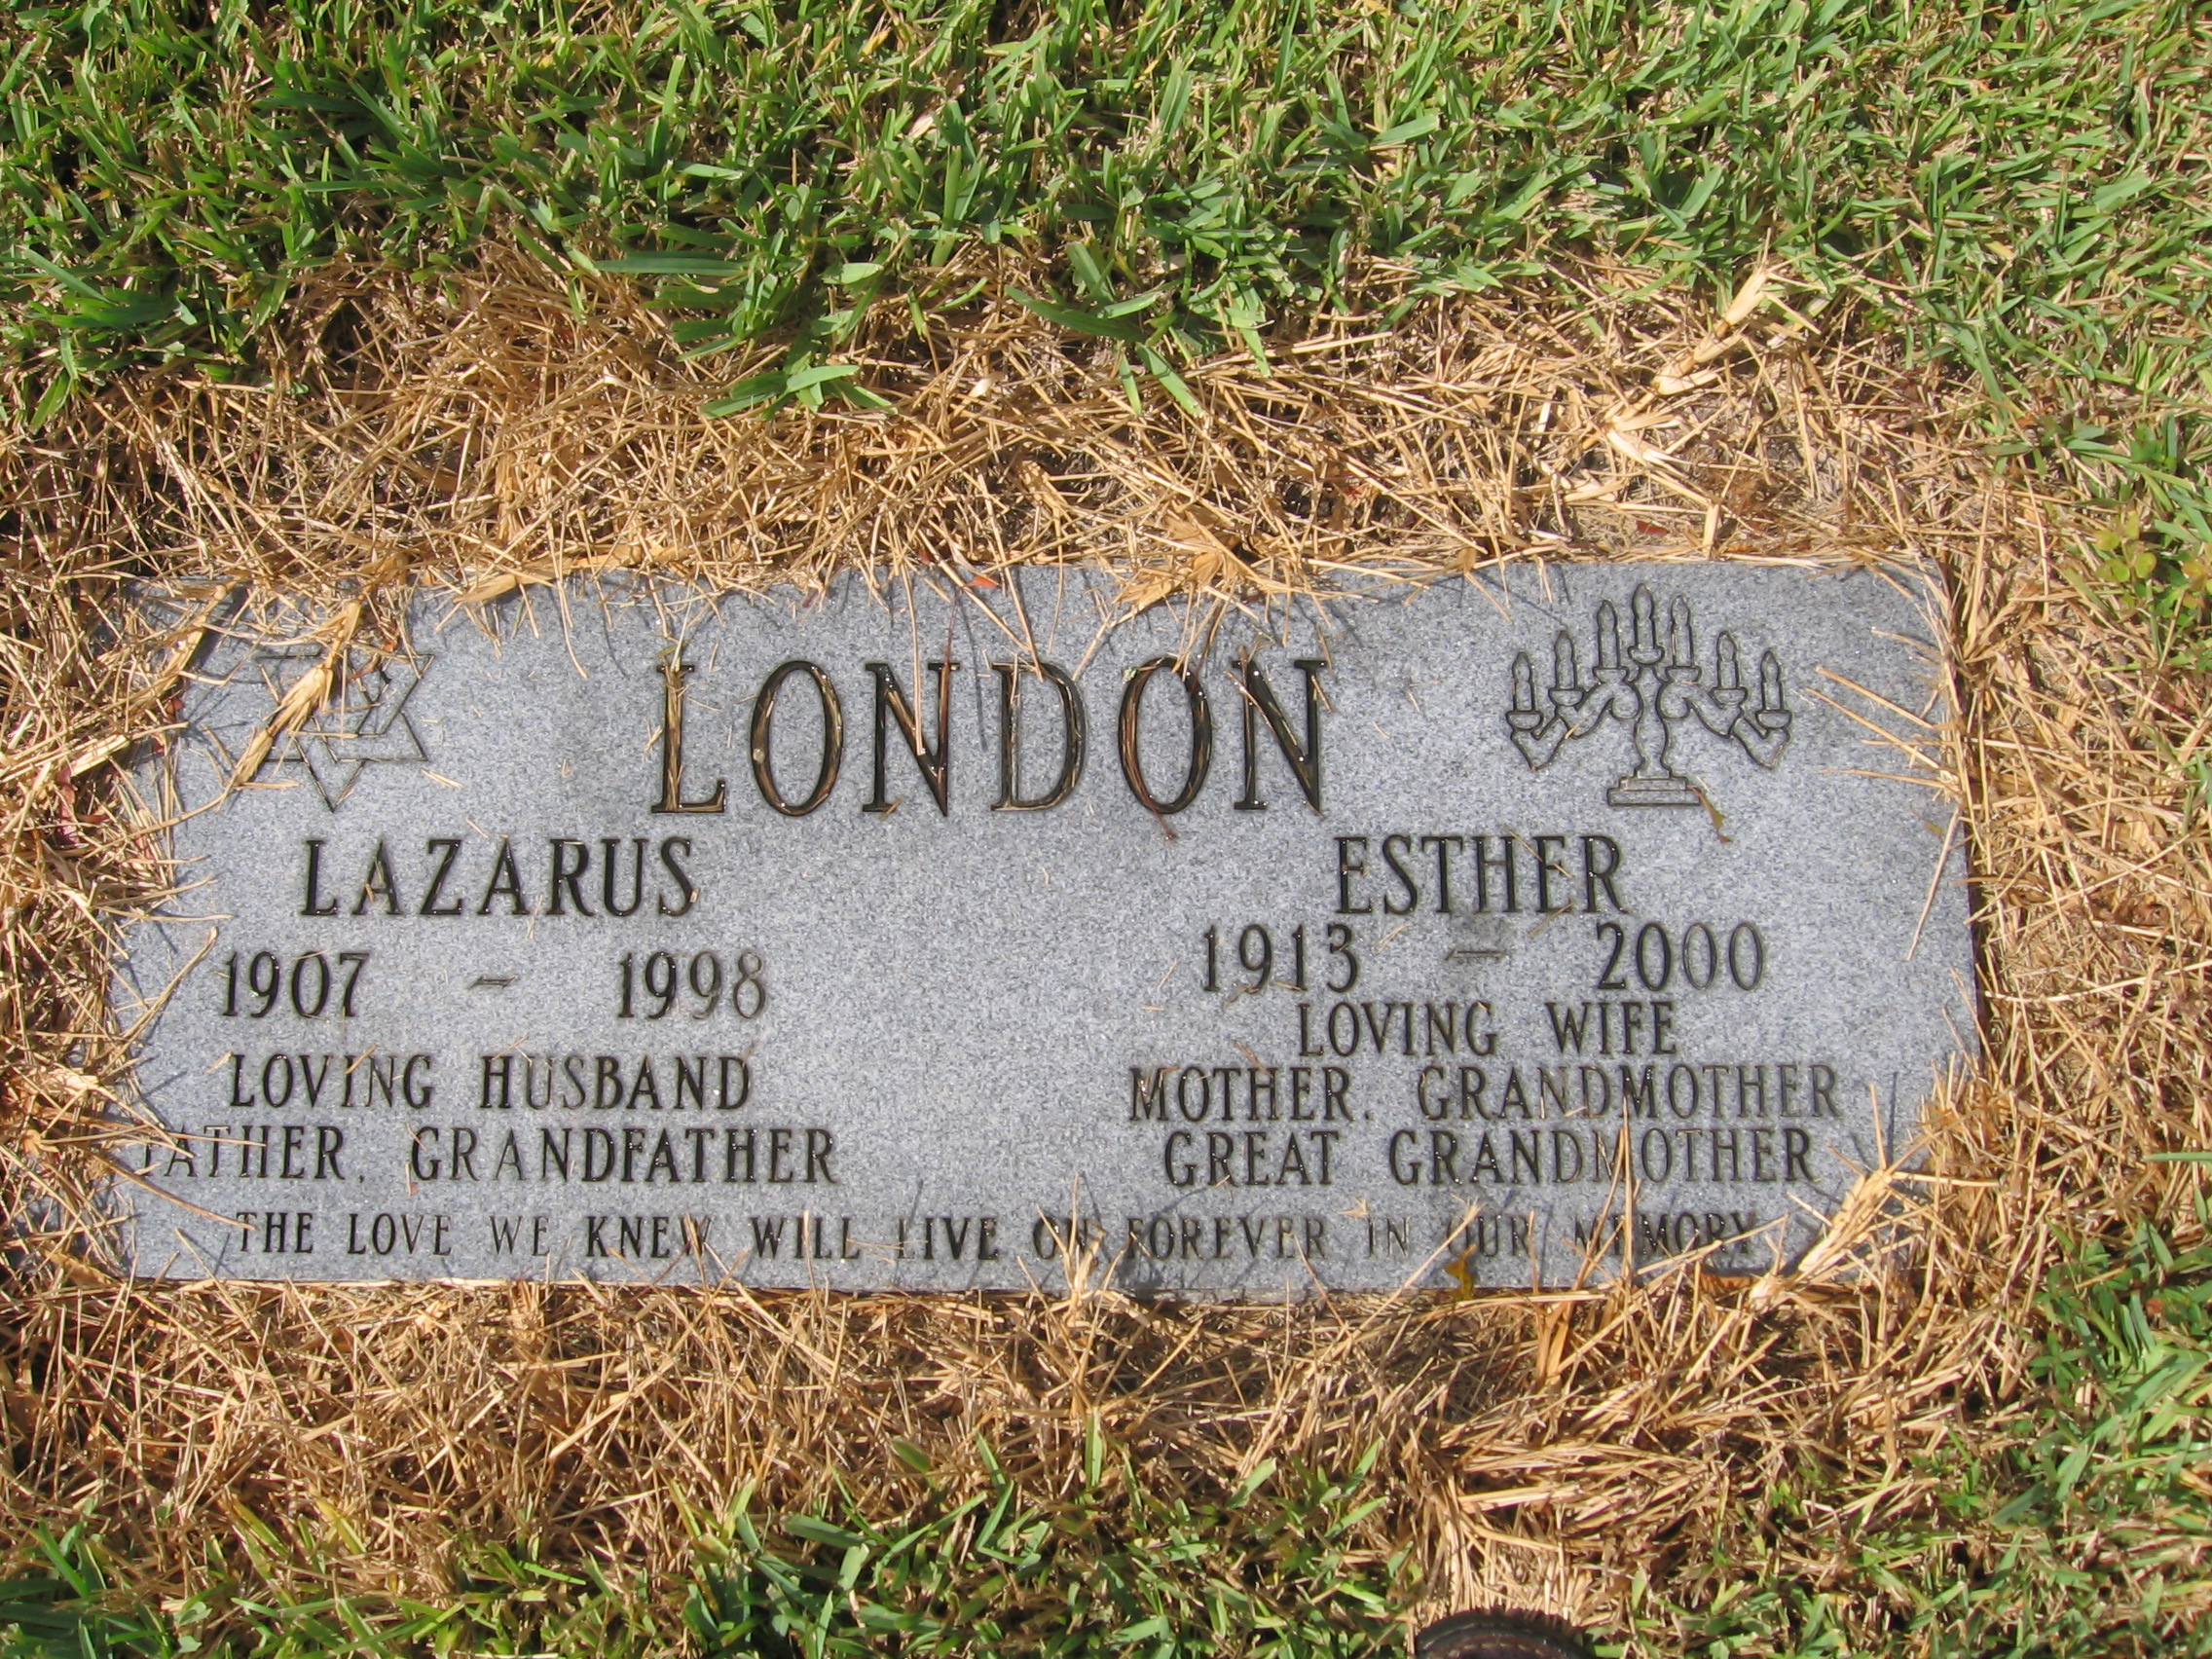 Lazarus London